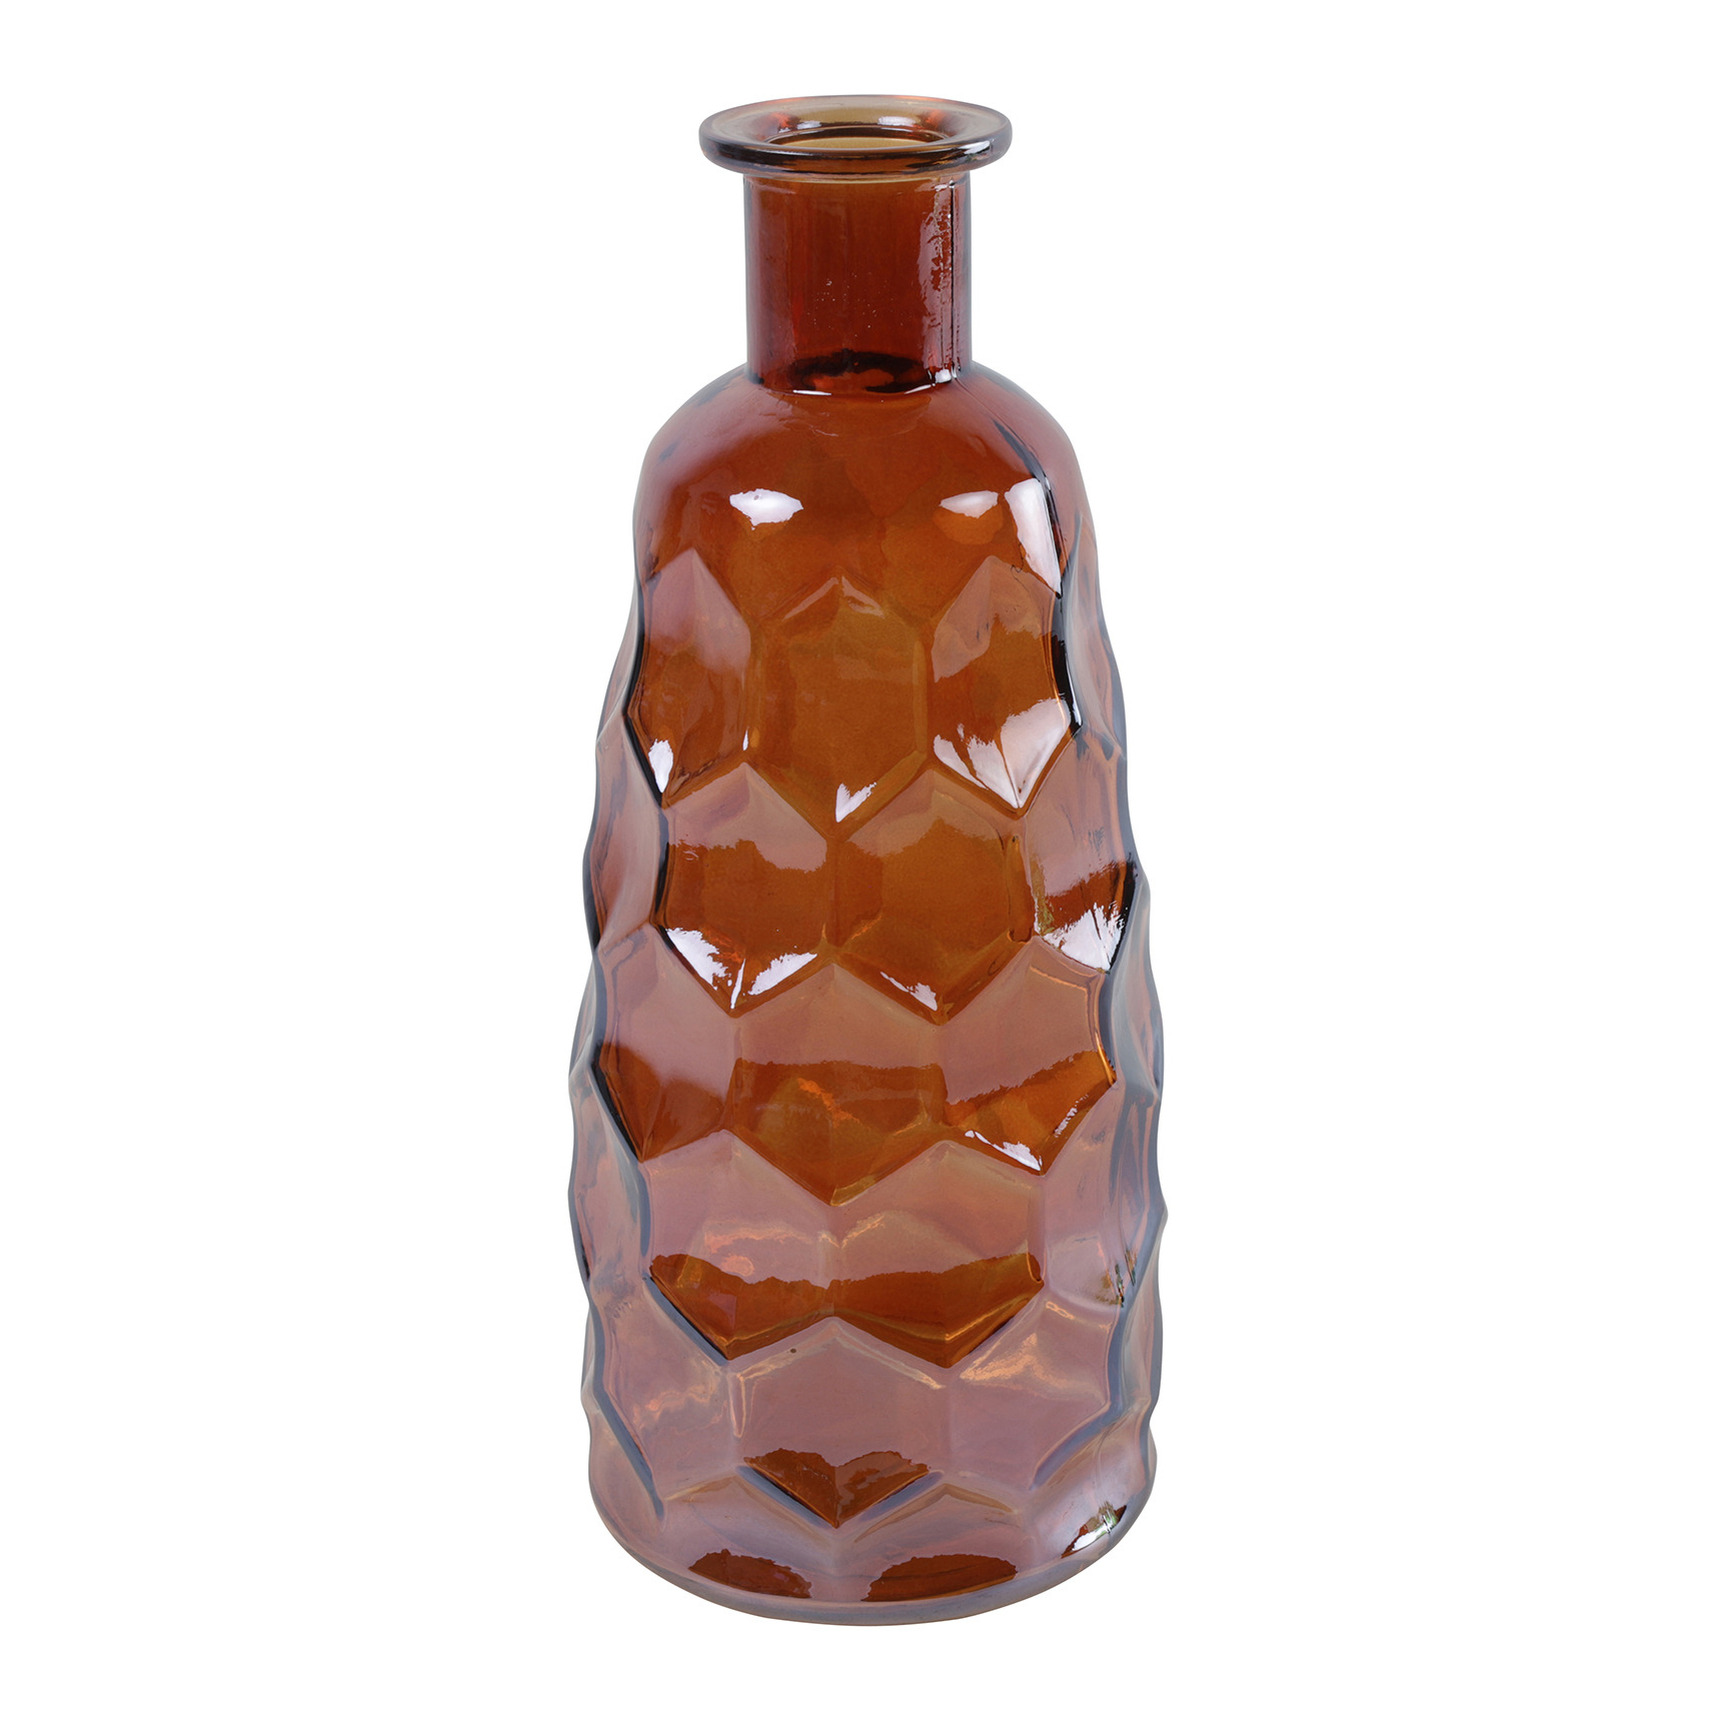 Countryfield Art Deco vaas cognac bruin transparant glas D12 x H30 cm